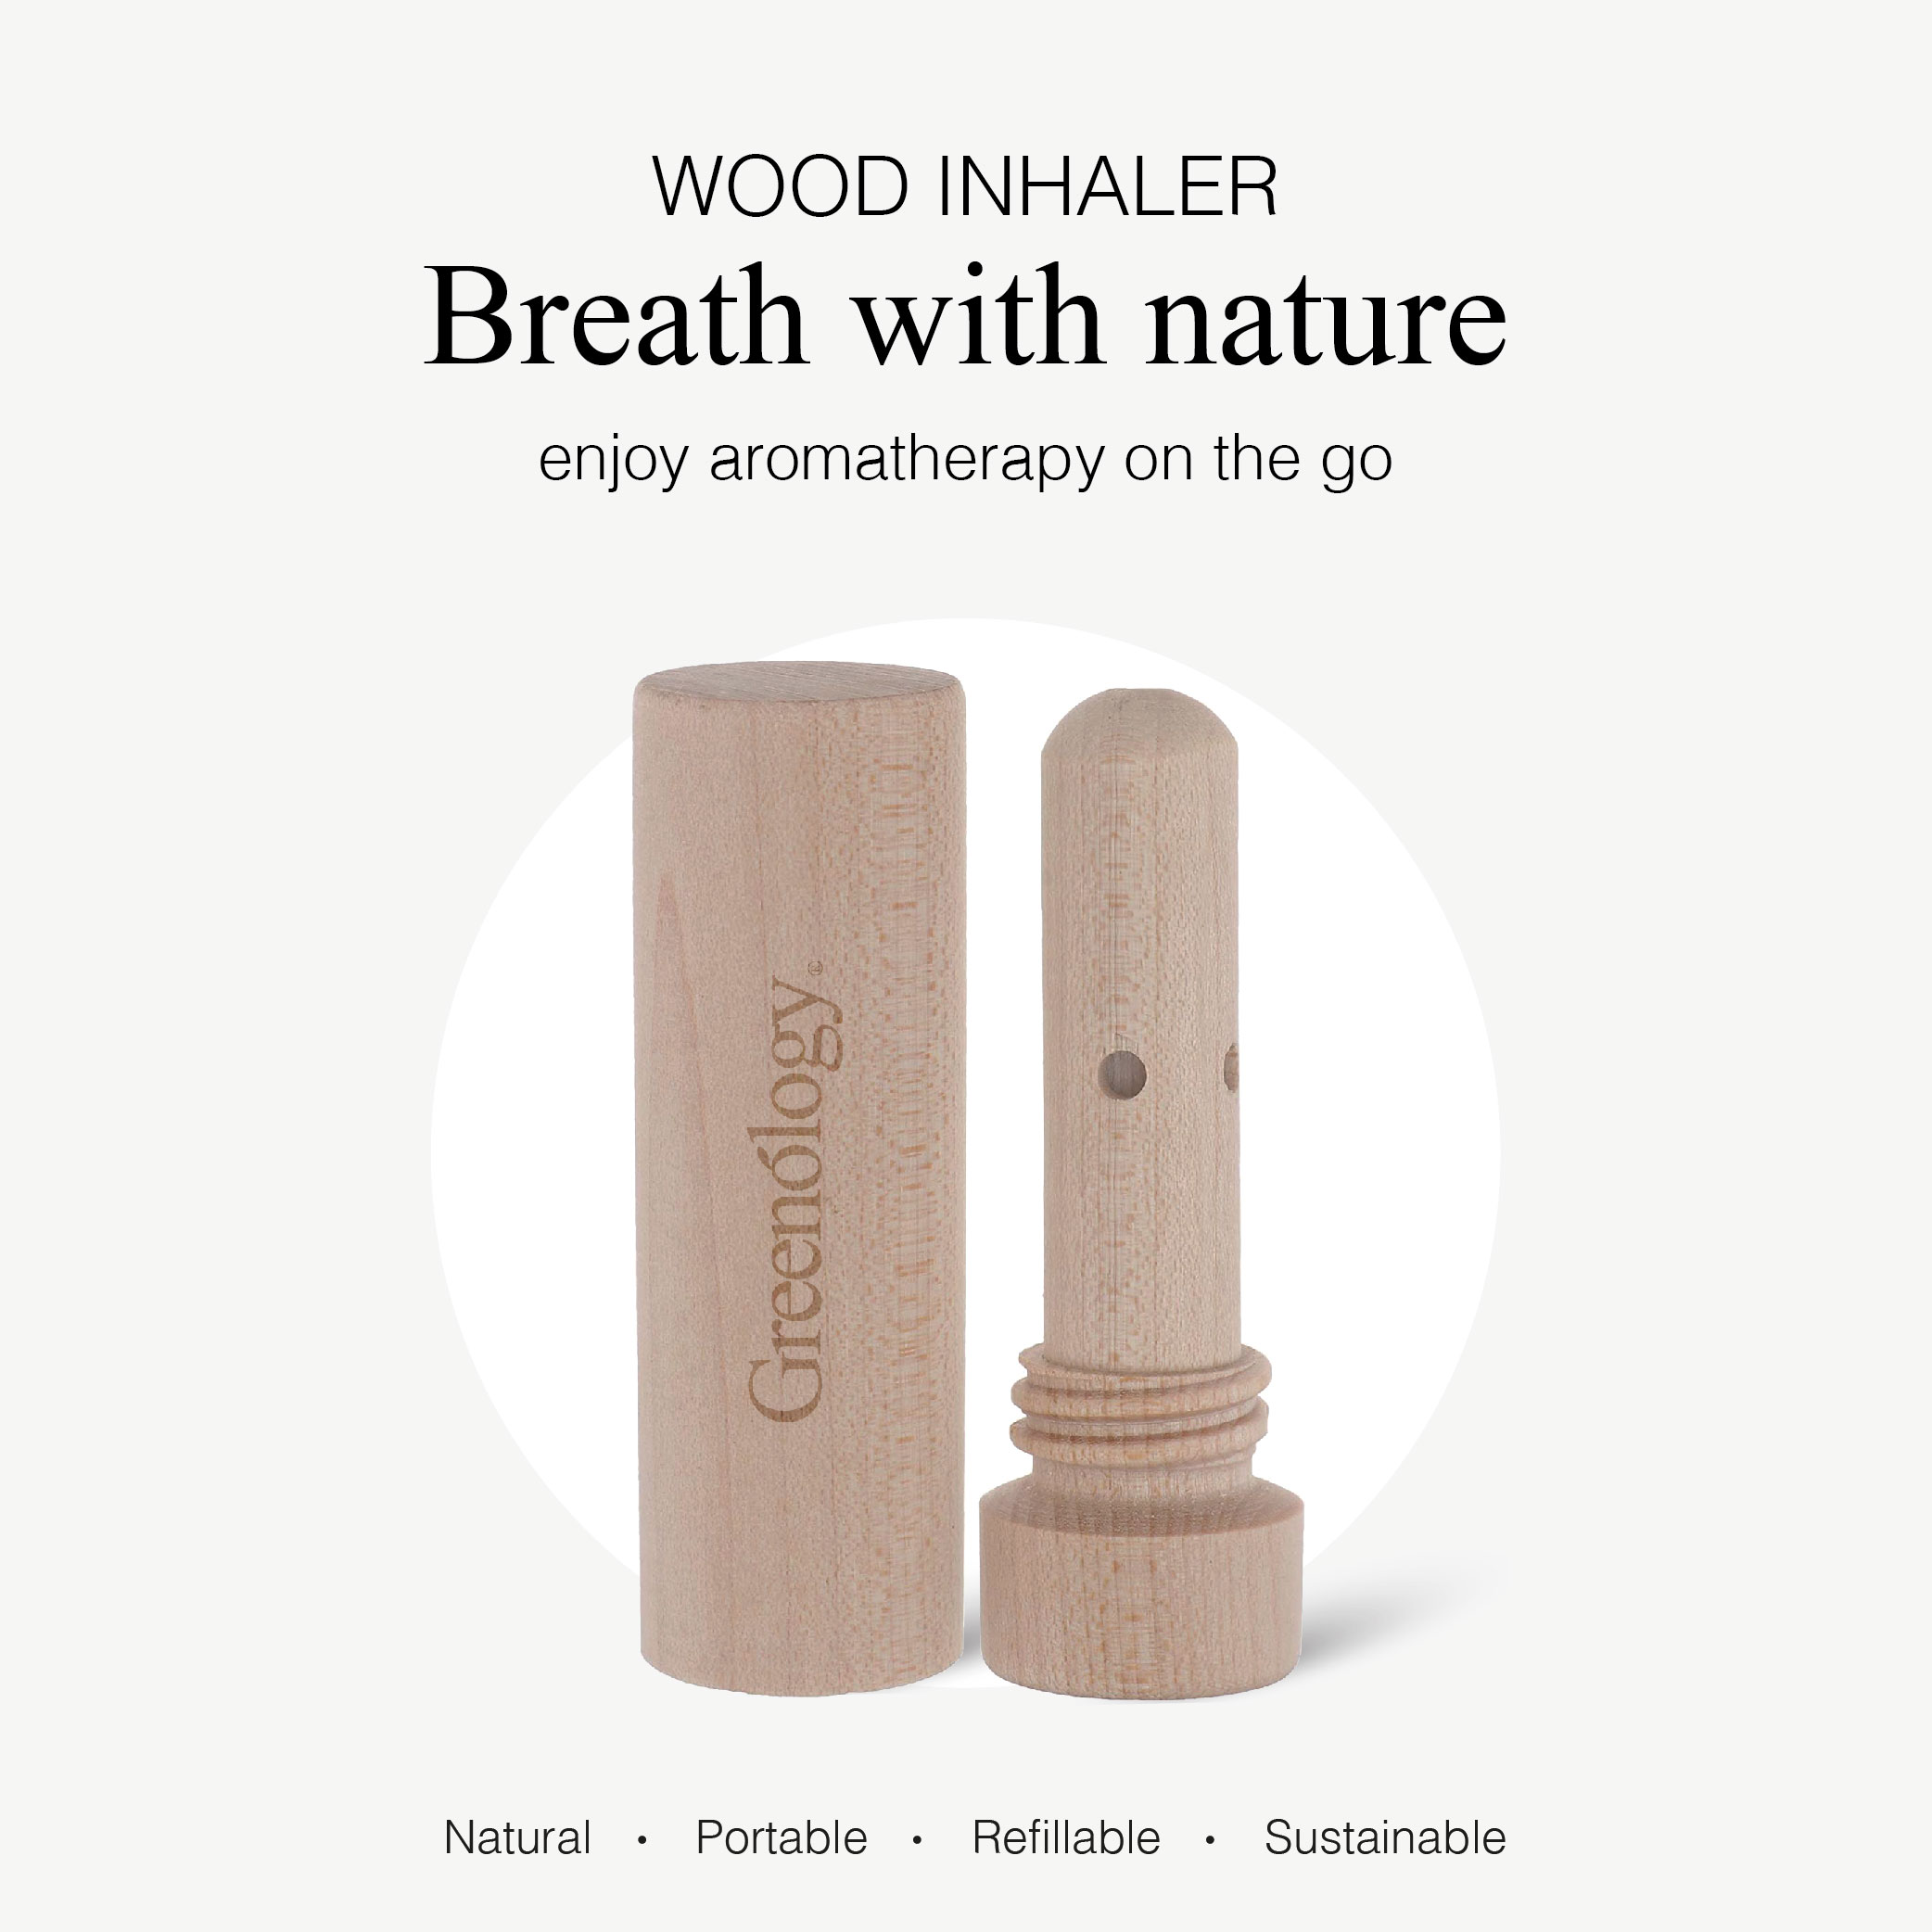 Greenology_Wood Inhaler_Product Description-01